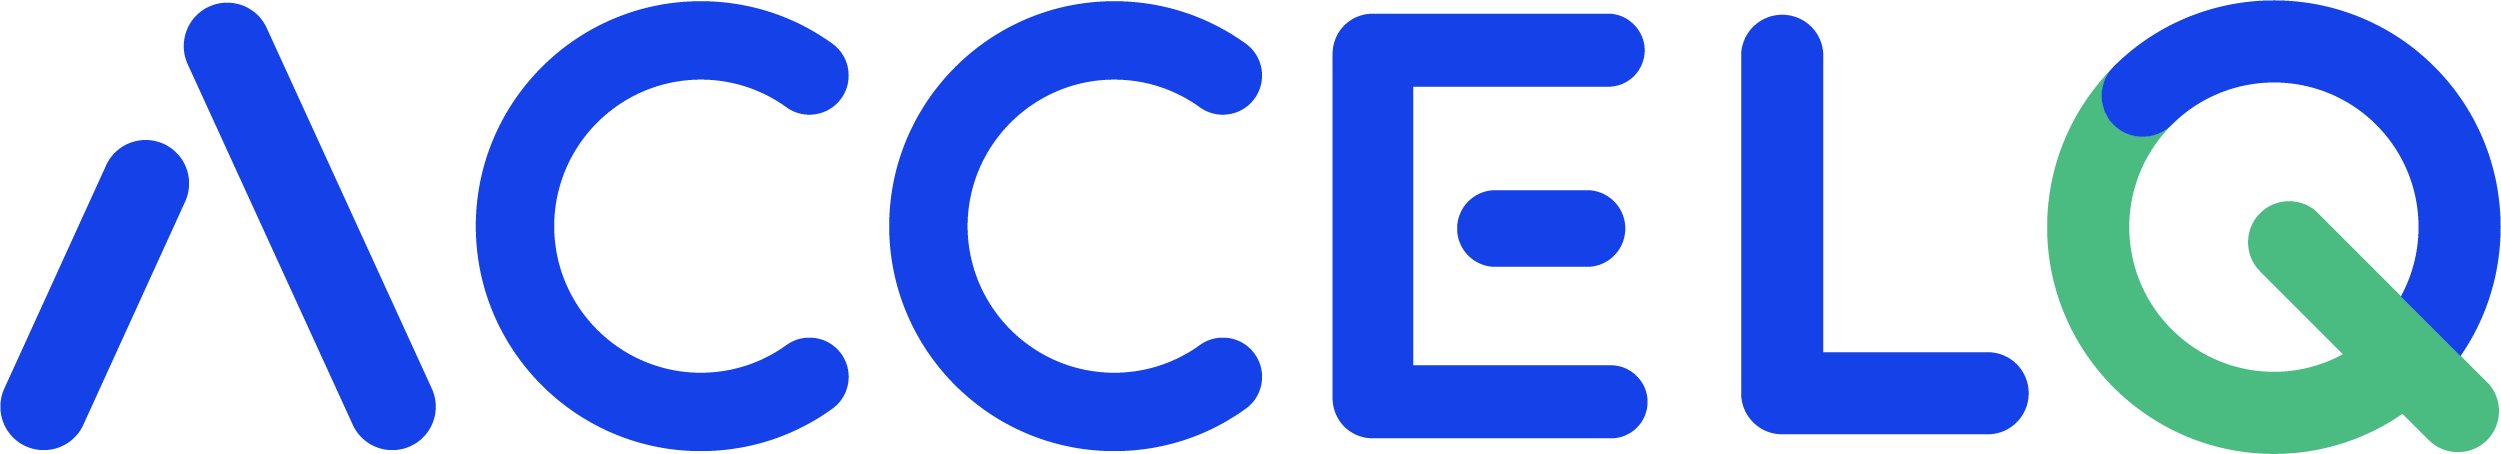 ACCELQ_logo